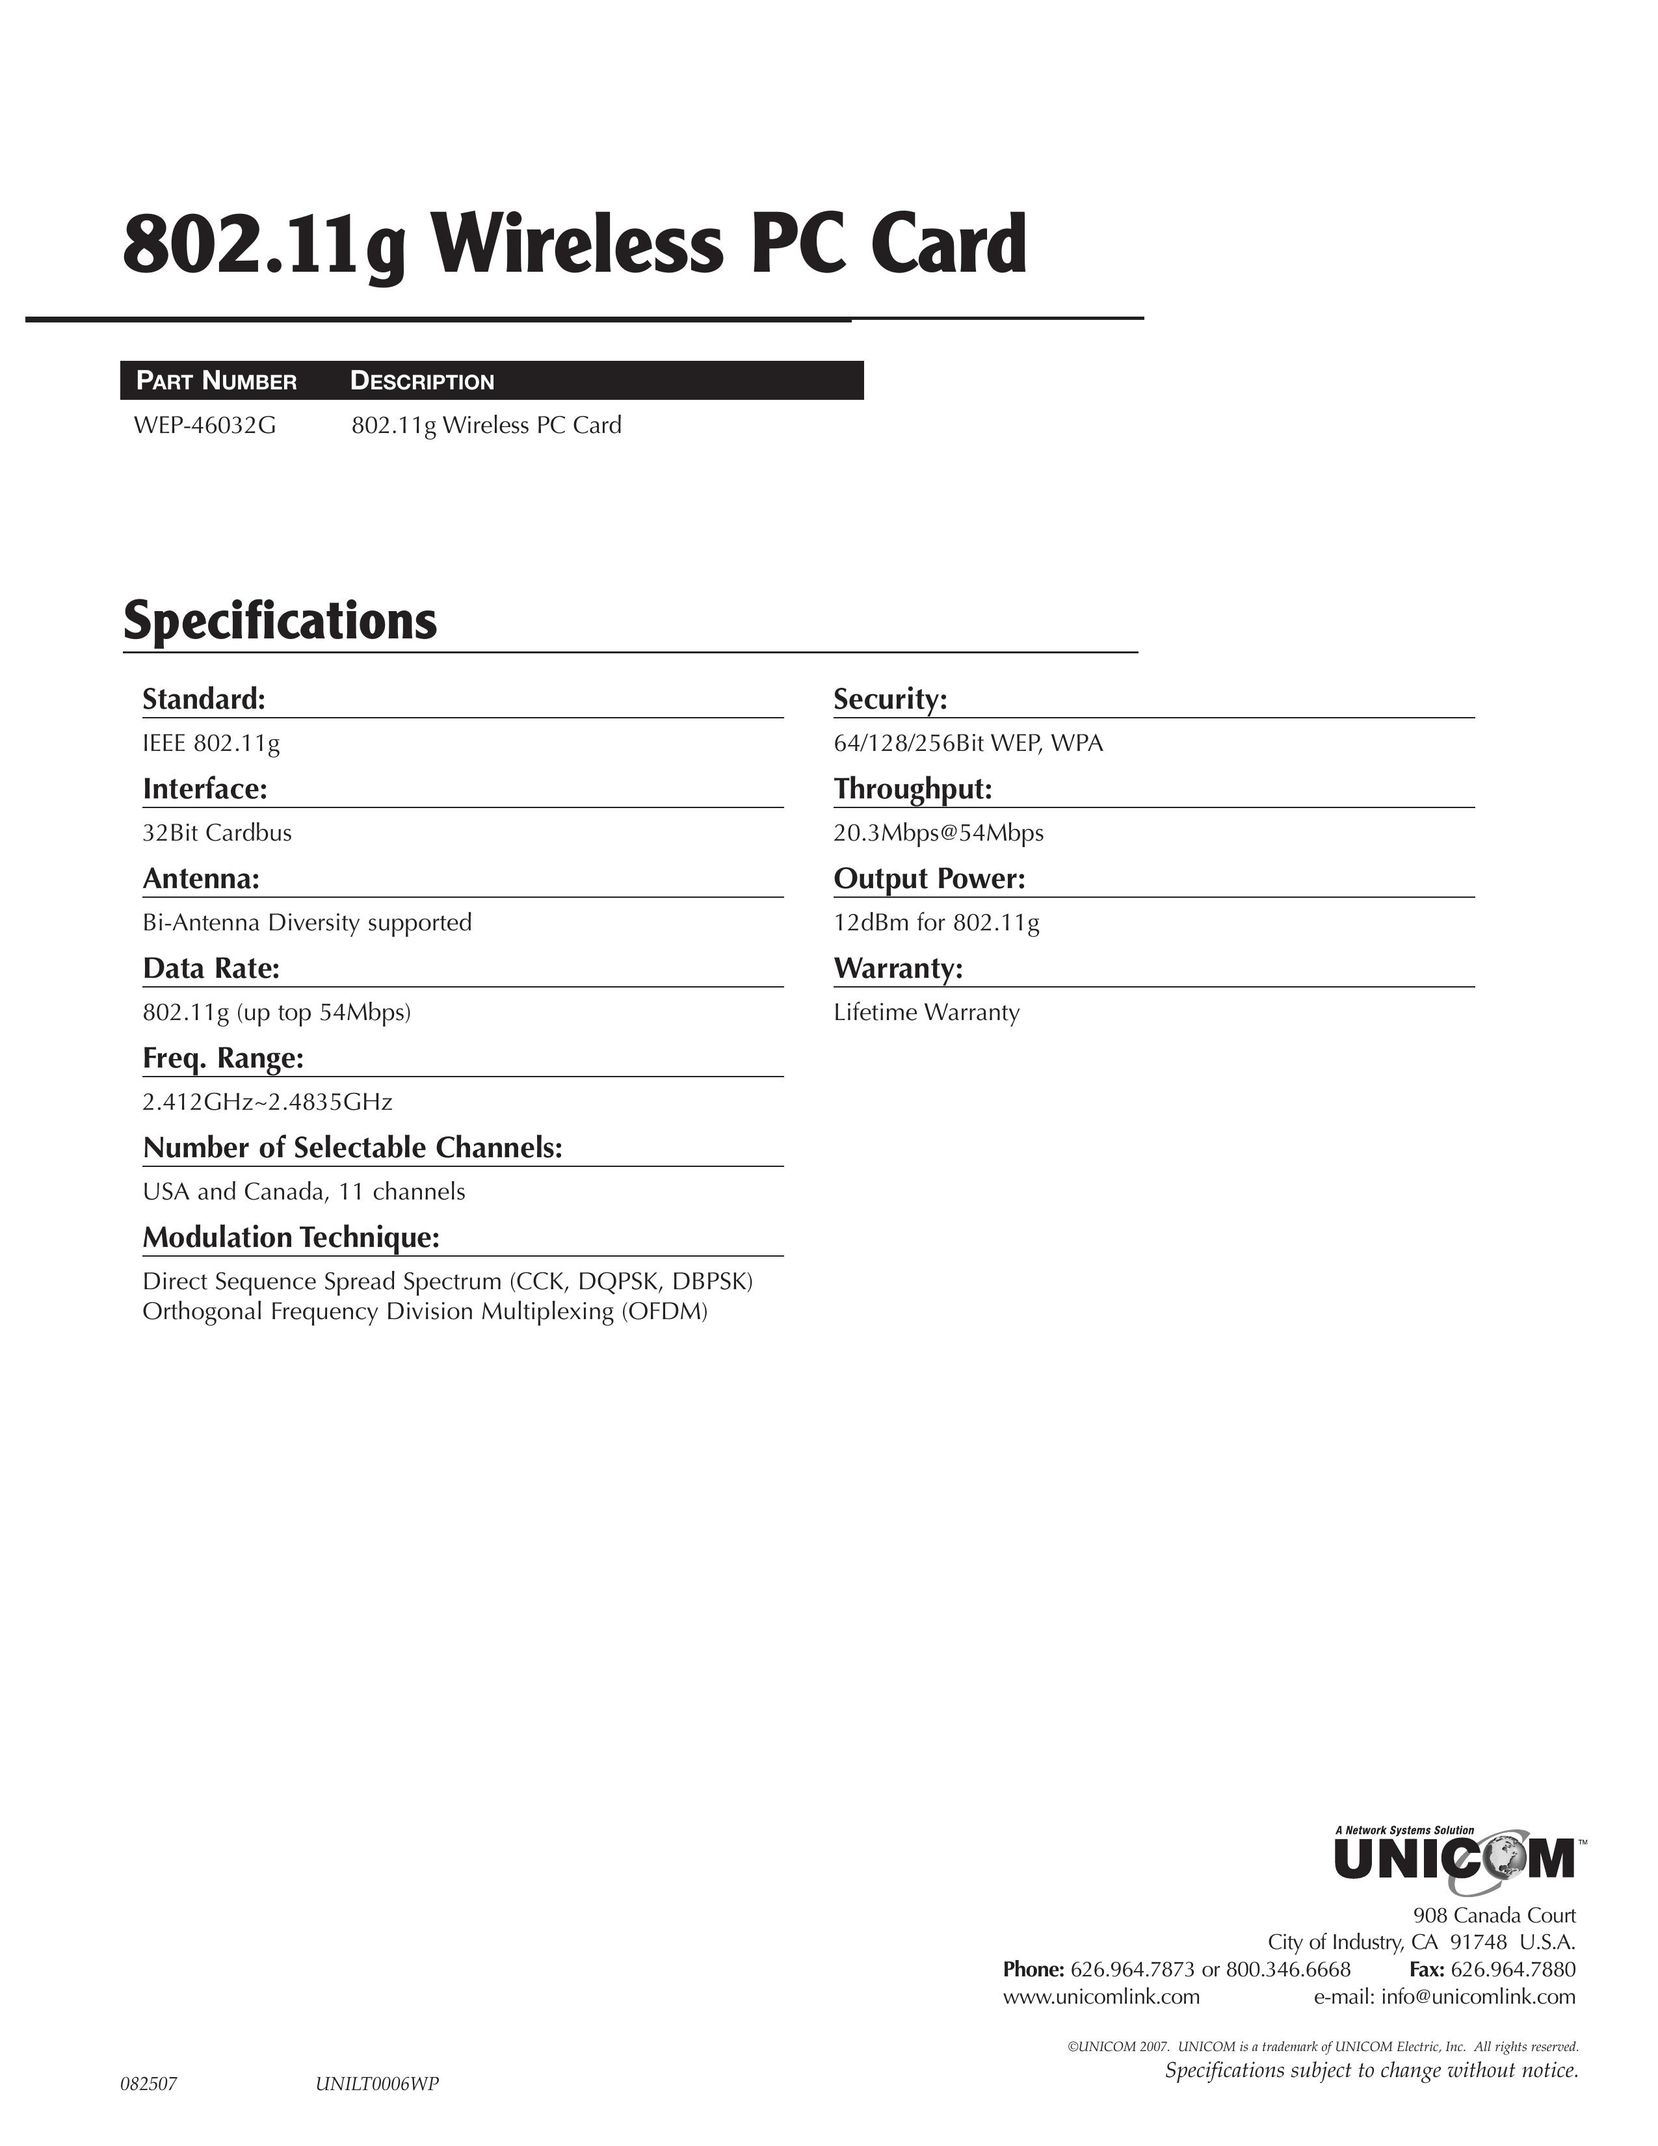 UNICOM Electric 802.11g Network Card User Manual